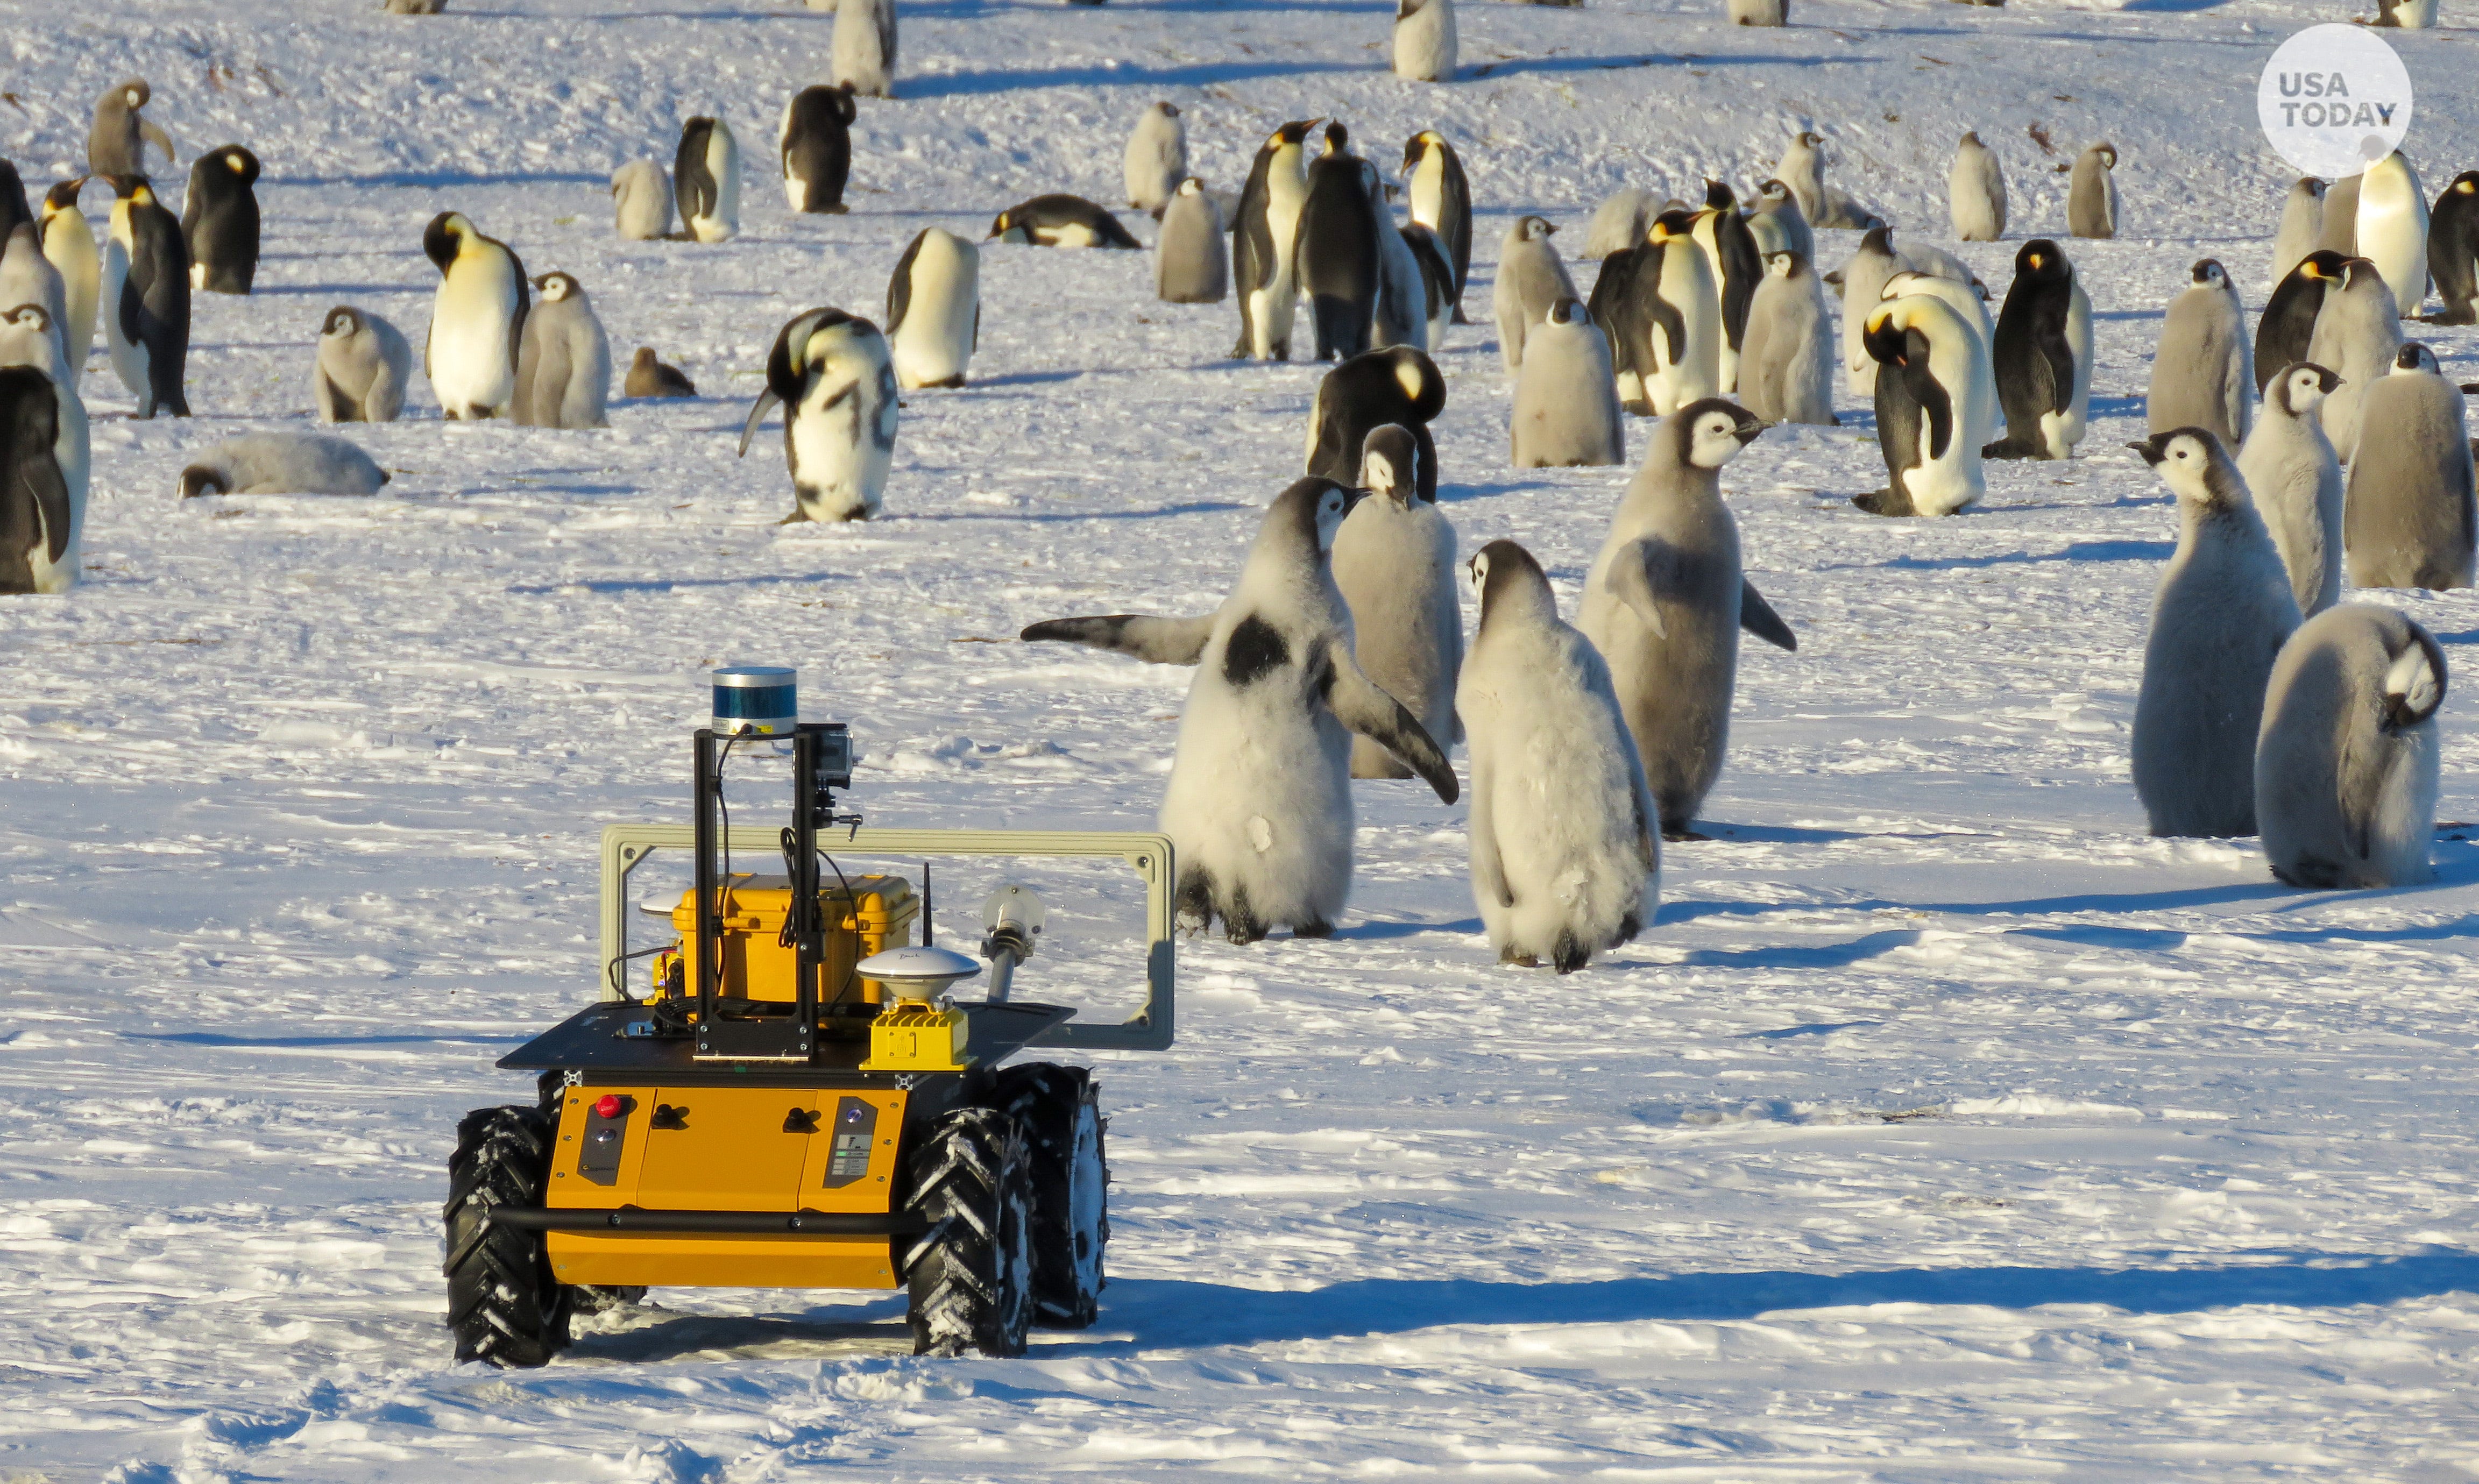 Robot joins emperor penguin waddle in Antarctica, helps scientists capture data thumbnail